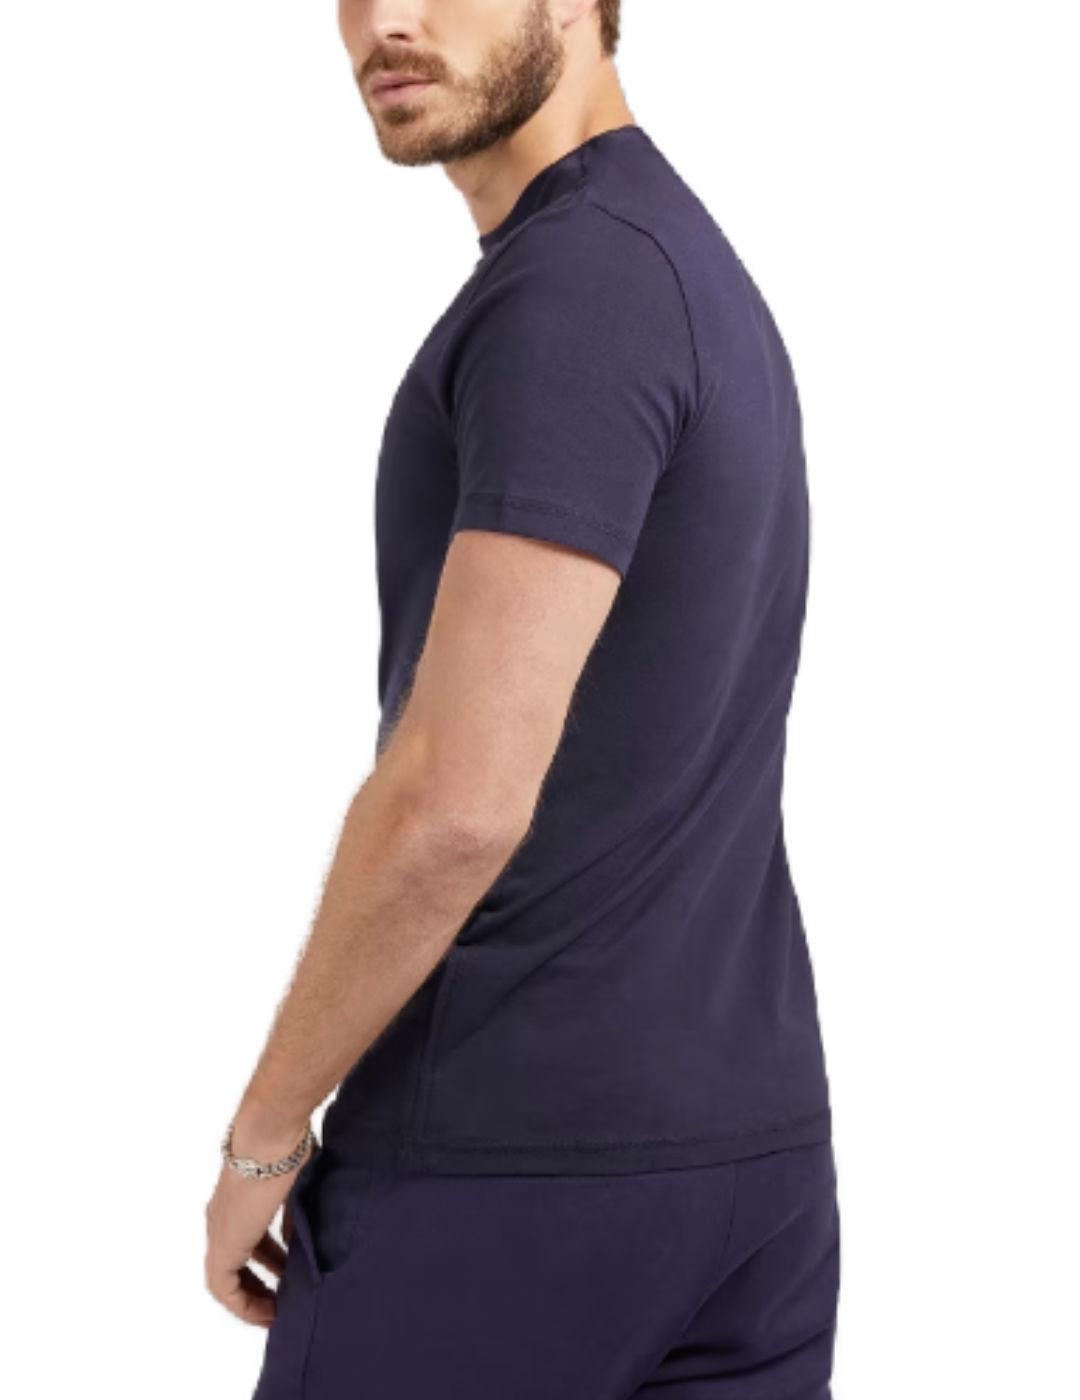 Camiseta Guess Aidy azul de manga corta para hombre